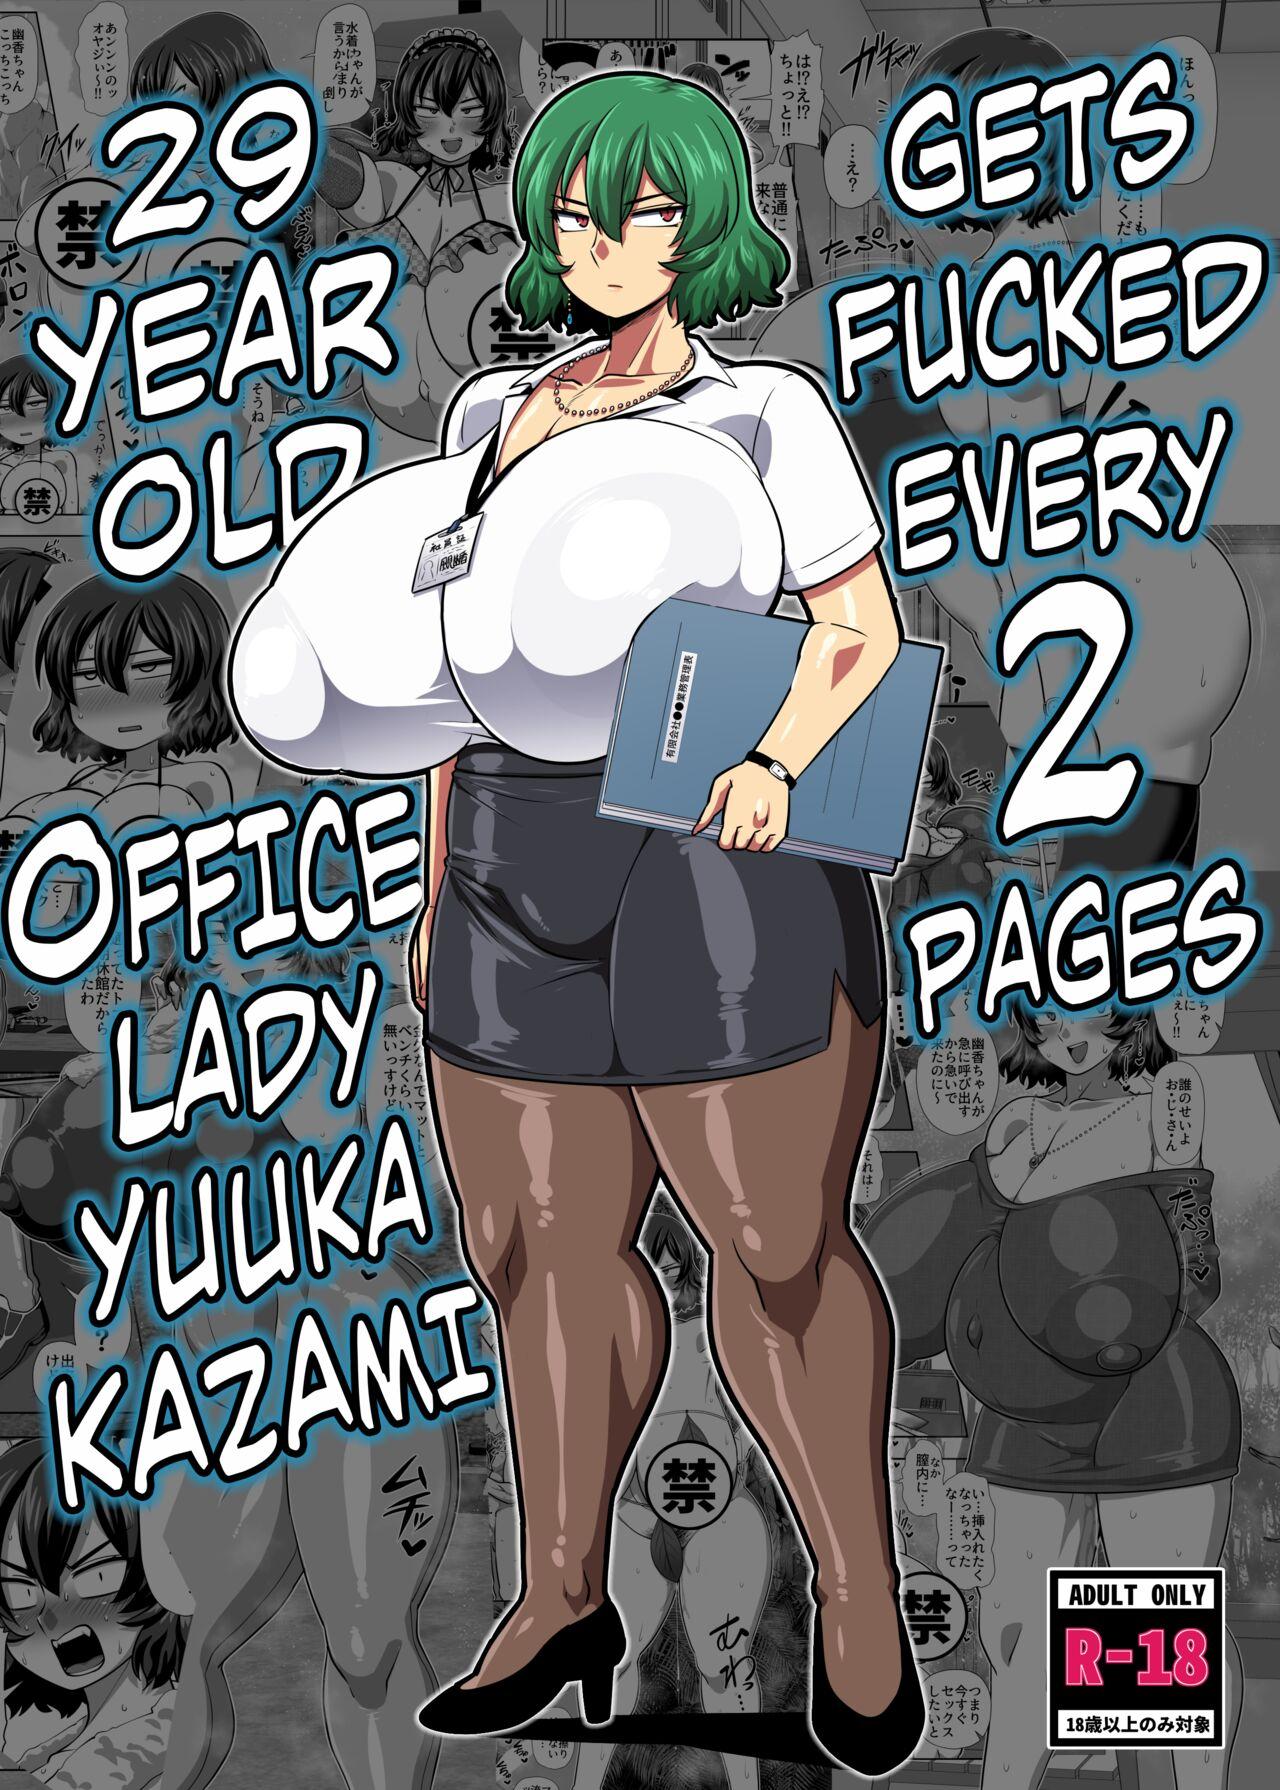 Gay Smoking 2 Page Goto ni Sokuhame Sareru Kazami Yuuka 29-sai OL | 29 Year Old Office Lady Yuuka Kazami Gets Fucked Every 2 Pages - Touhou project Rabo - Page 1